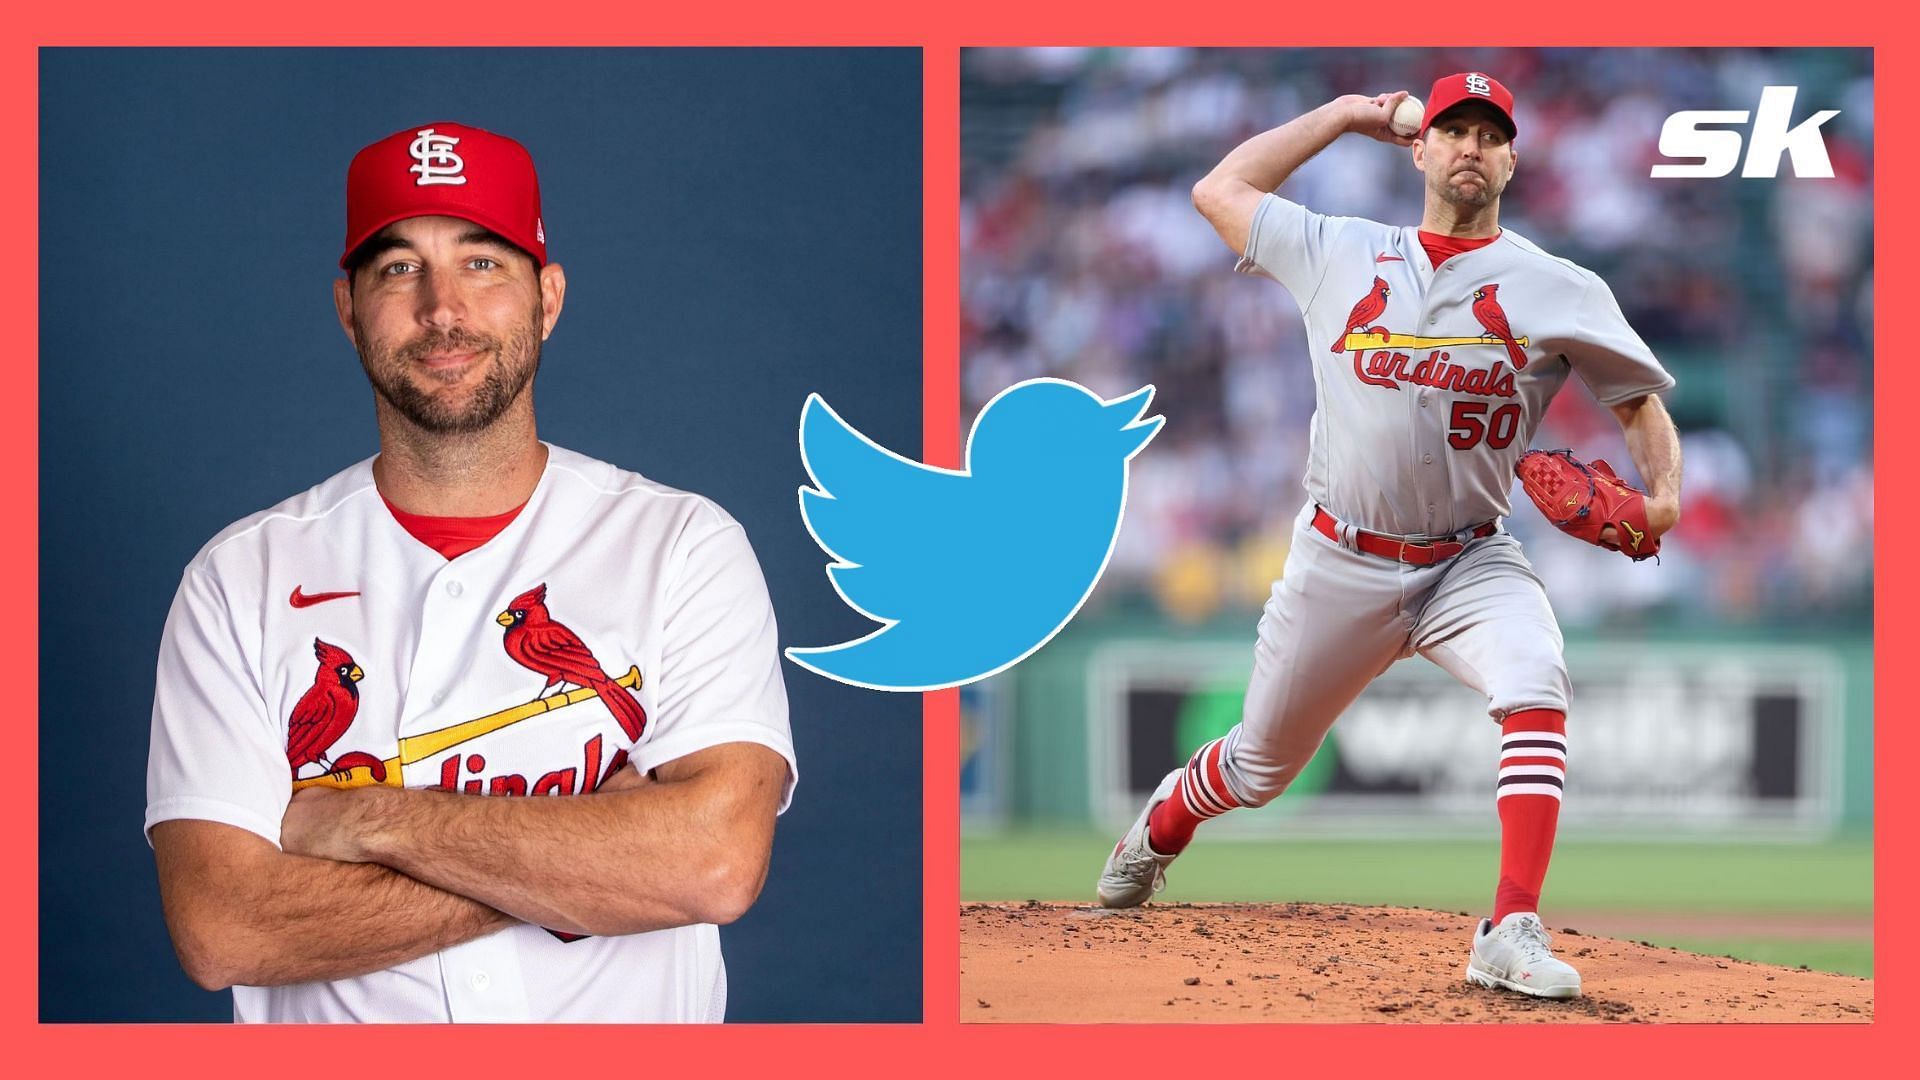 St. Louis Cardinals legend Adam Wainwright deactivated his Twitter account following harassment from online trolls